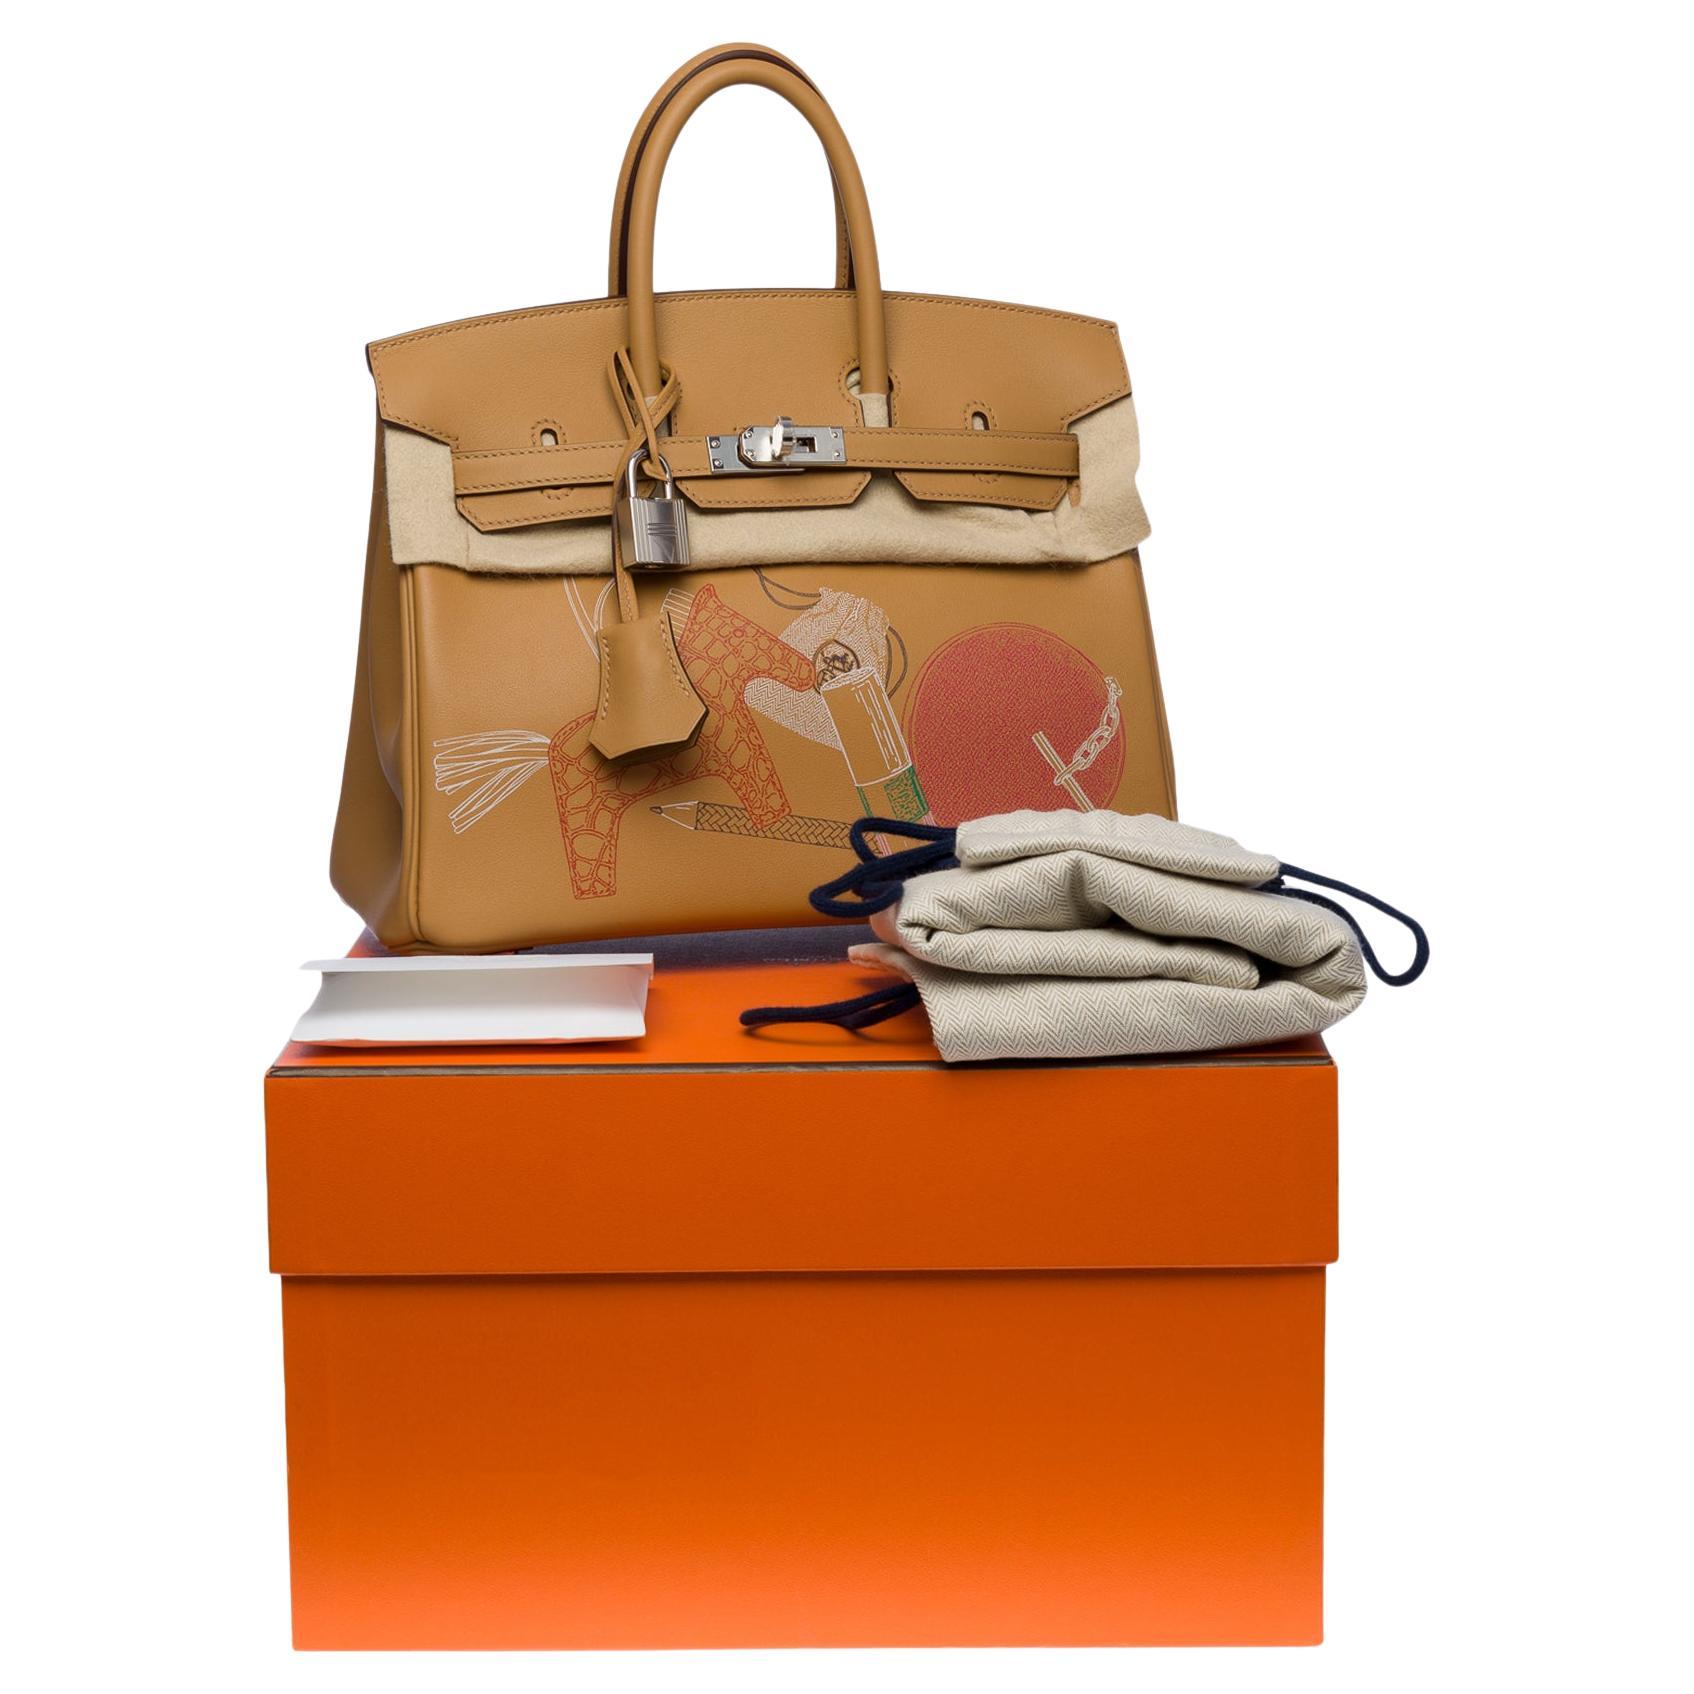  Fantastic Hermes Birkin 25cm handbag Biscuit In & Out Limited Edition Swift PHW